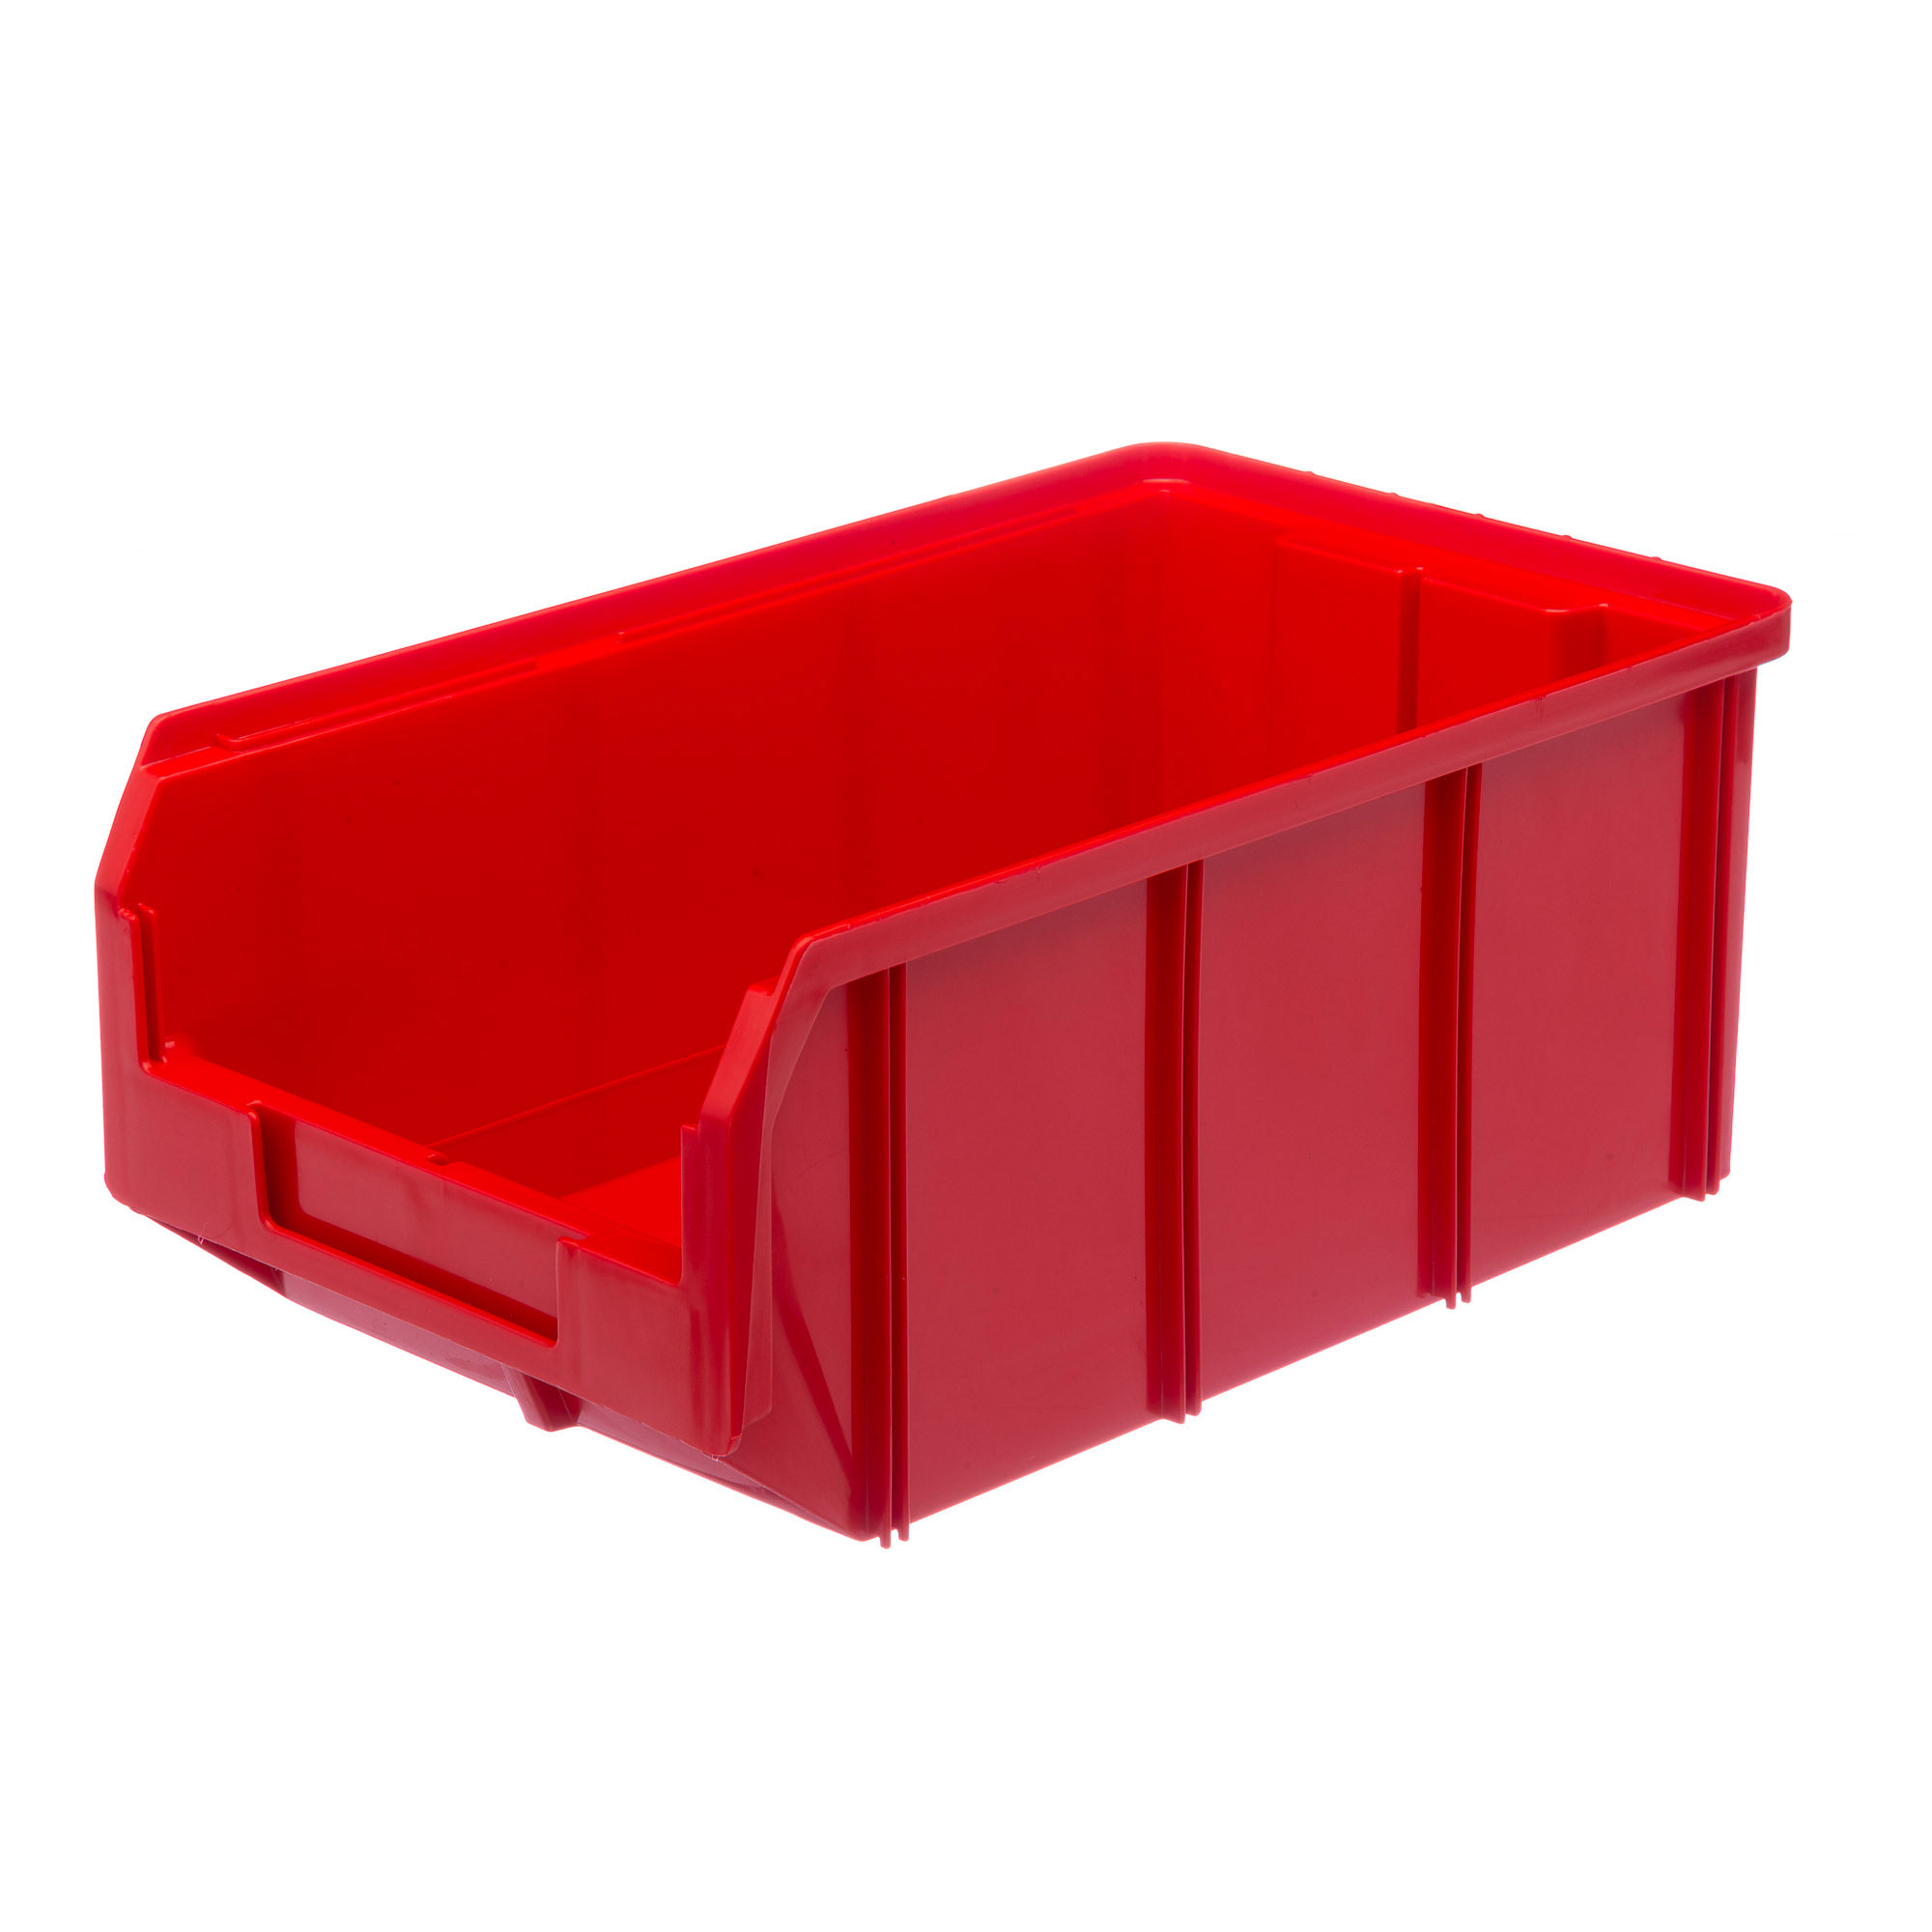 Пластиковый ящик Стелла-техник V-3-красный 342х207x143мм, 9,4 литра лоток для крепежа пластиковый 375х225х160 мм курс 65692